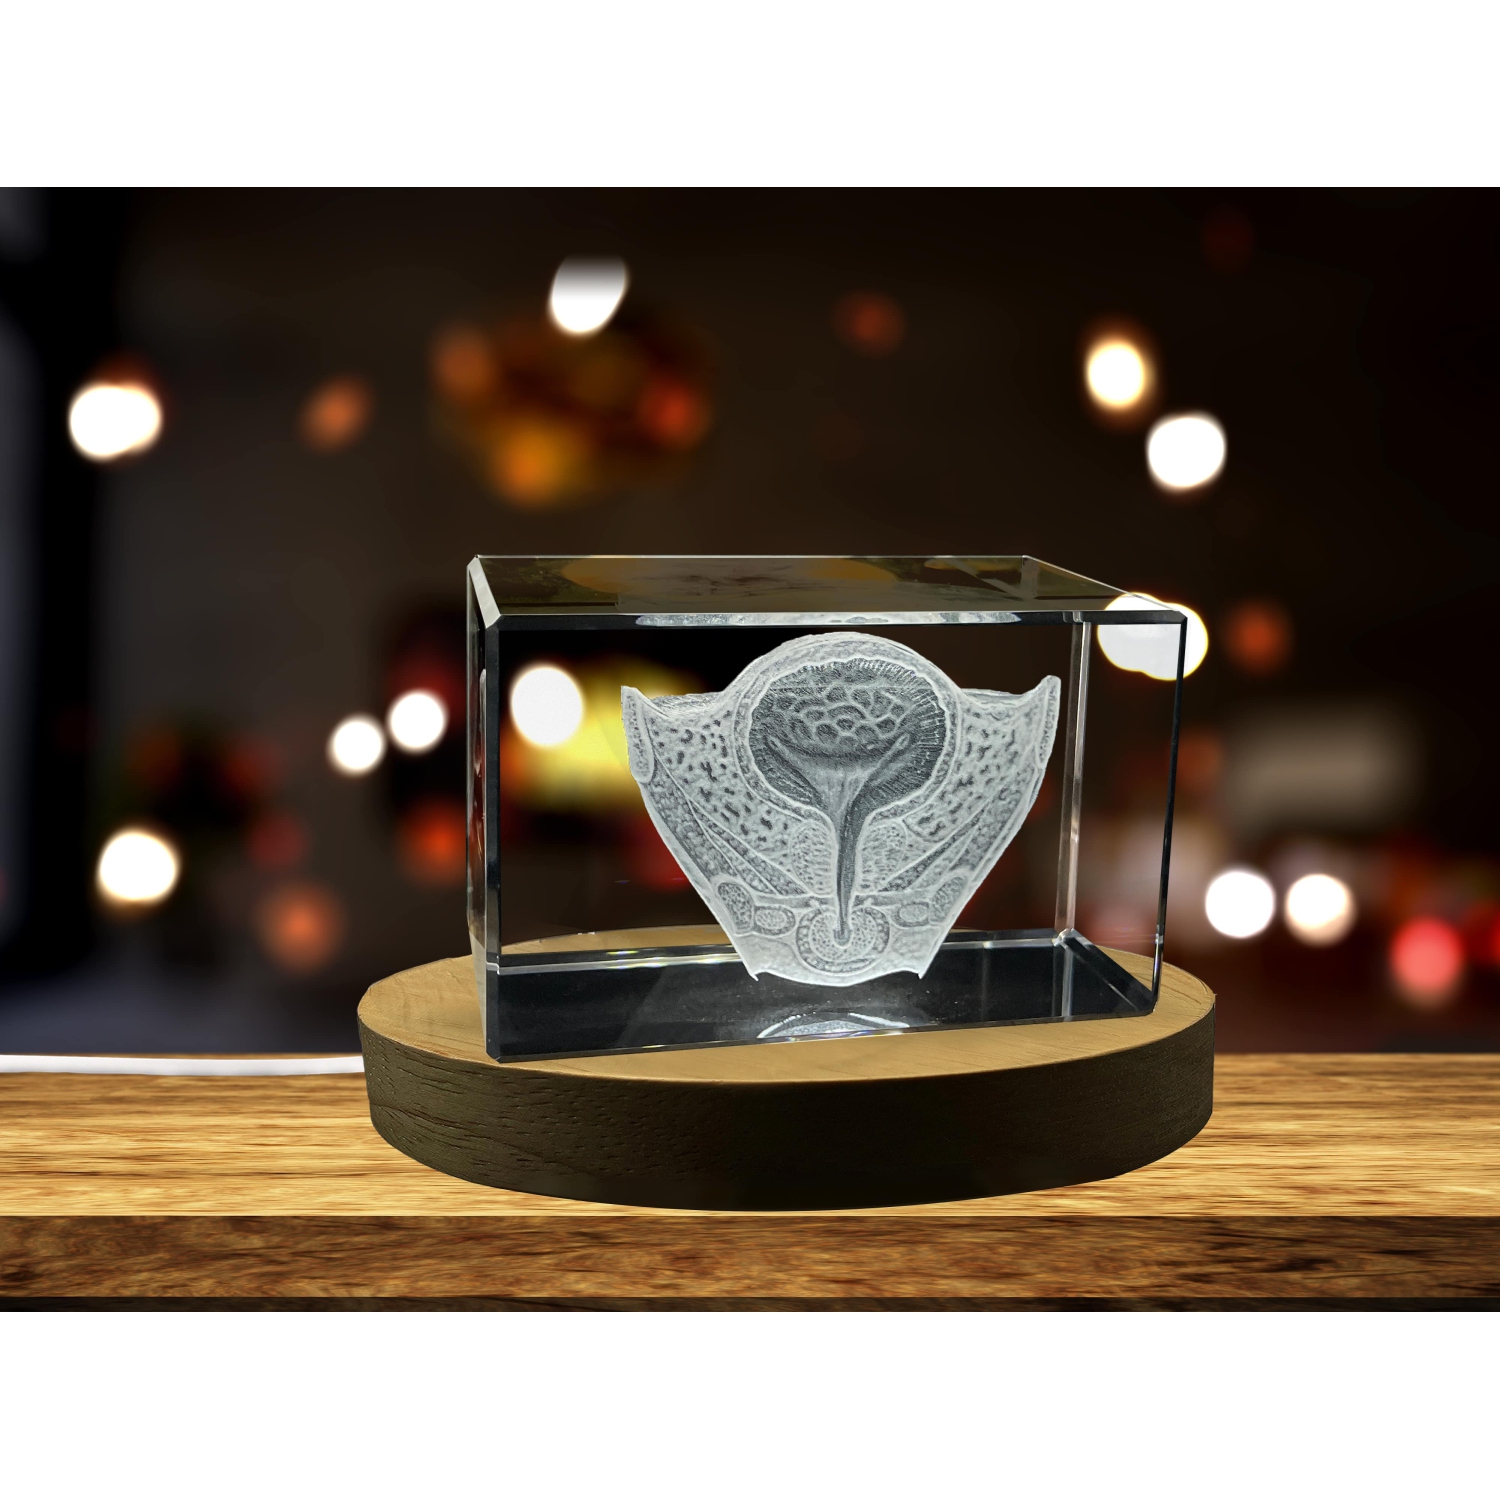 Urinary bladder | 3D Engraved Crystal Keepsake | Gift For Urologists | Doctor Gift | Souvenir | personalized 3D crystal photo gift |Customized 3d photo Engraved Crystal